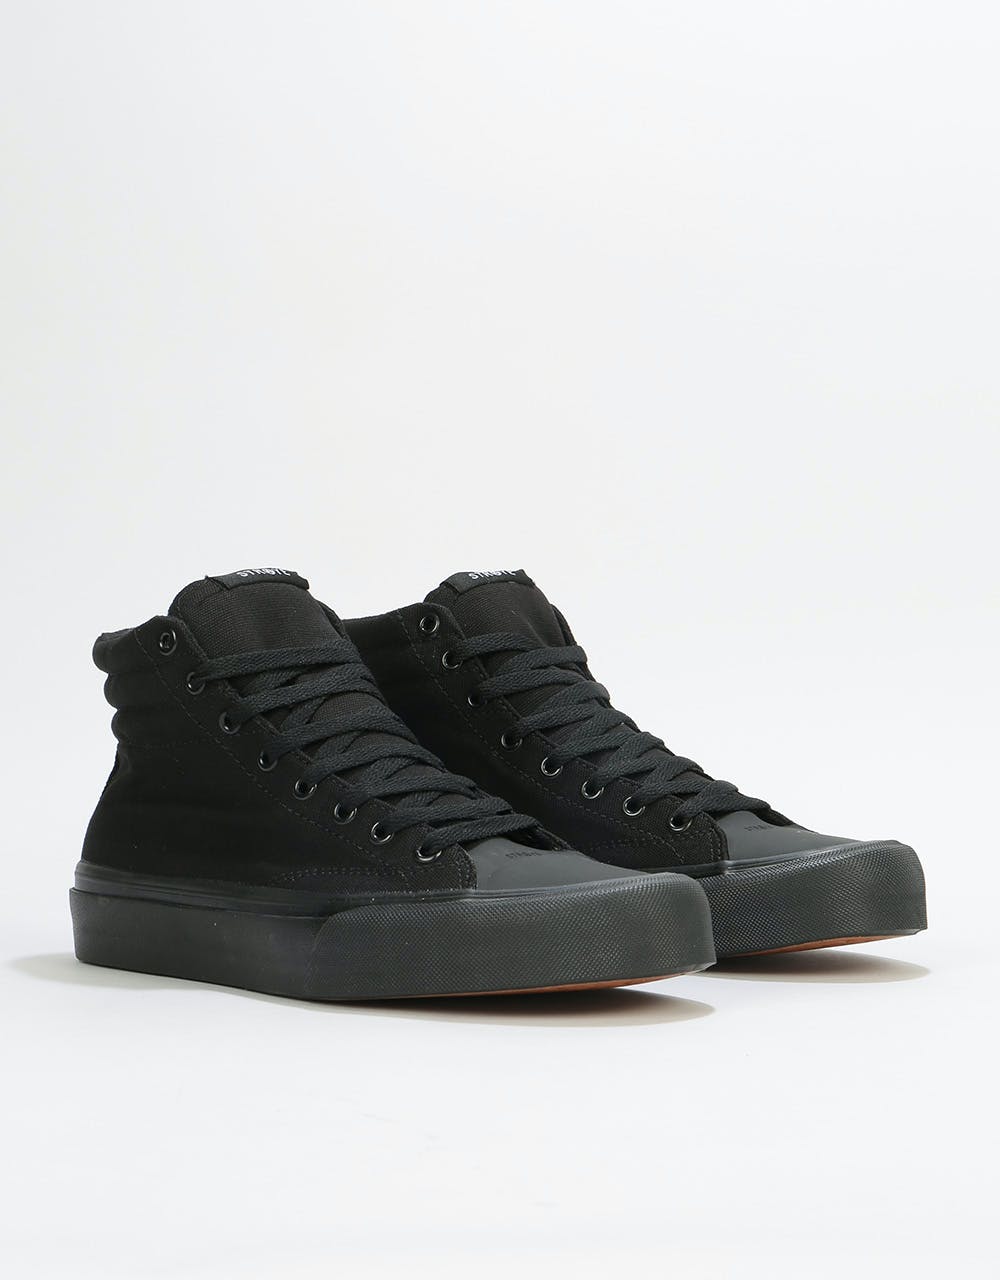 Straye Venice High Skate Shoes - Black/Black Canvas